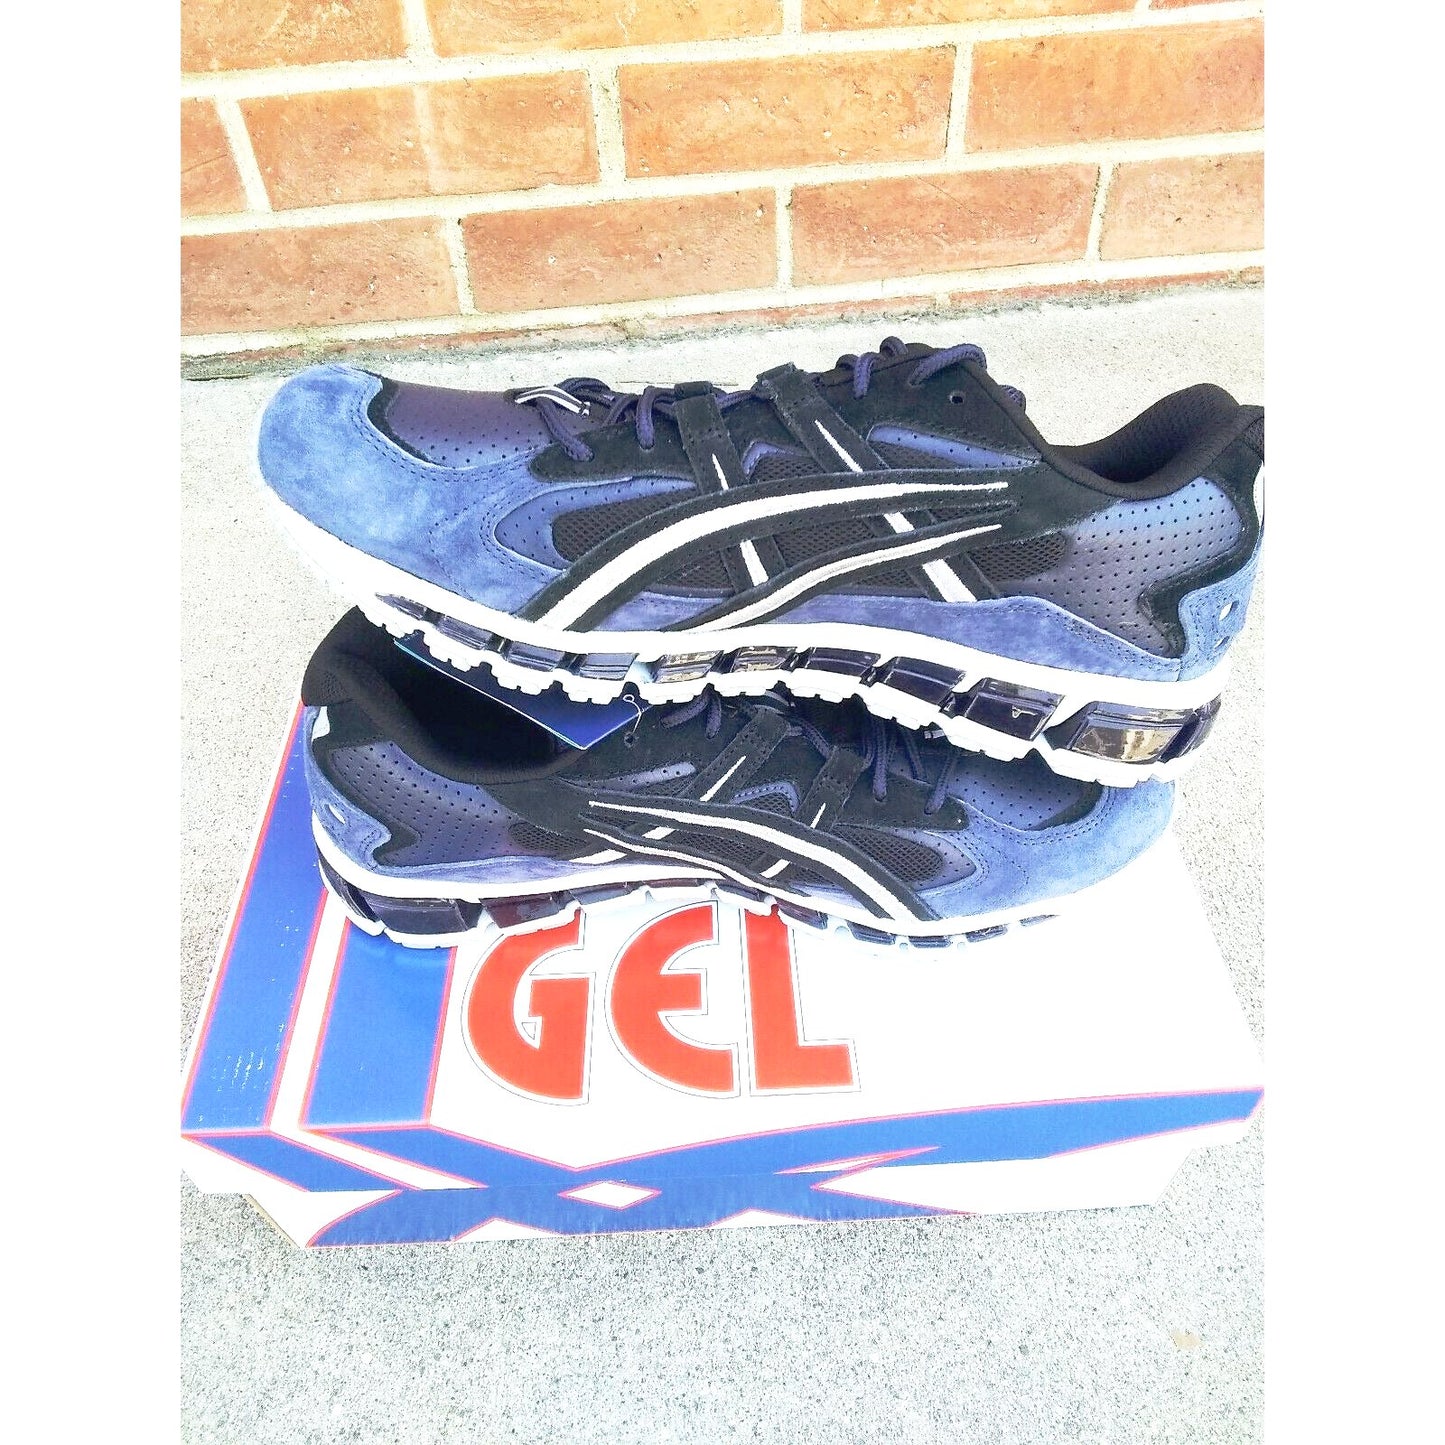 Asics Gel Kayano 5 360 Midnight Black running shoes Size 11.5 Men US